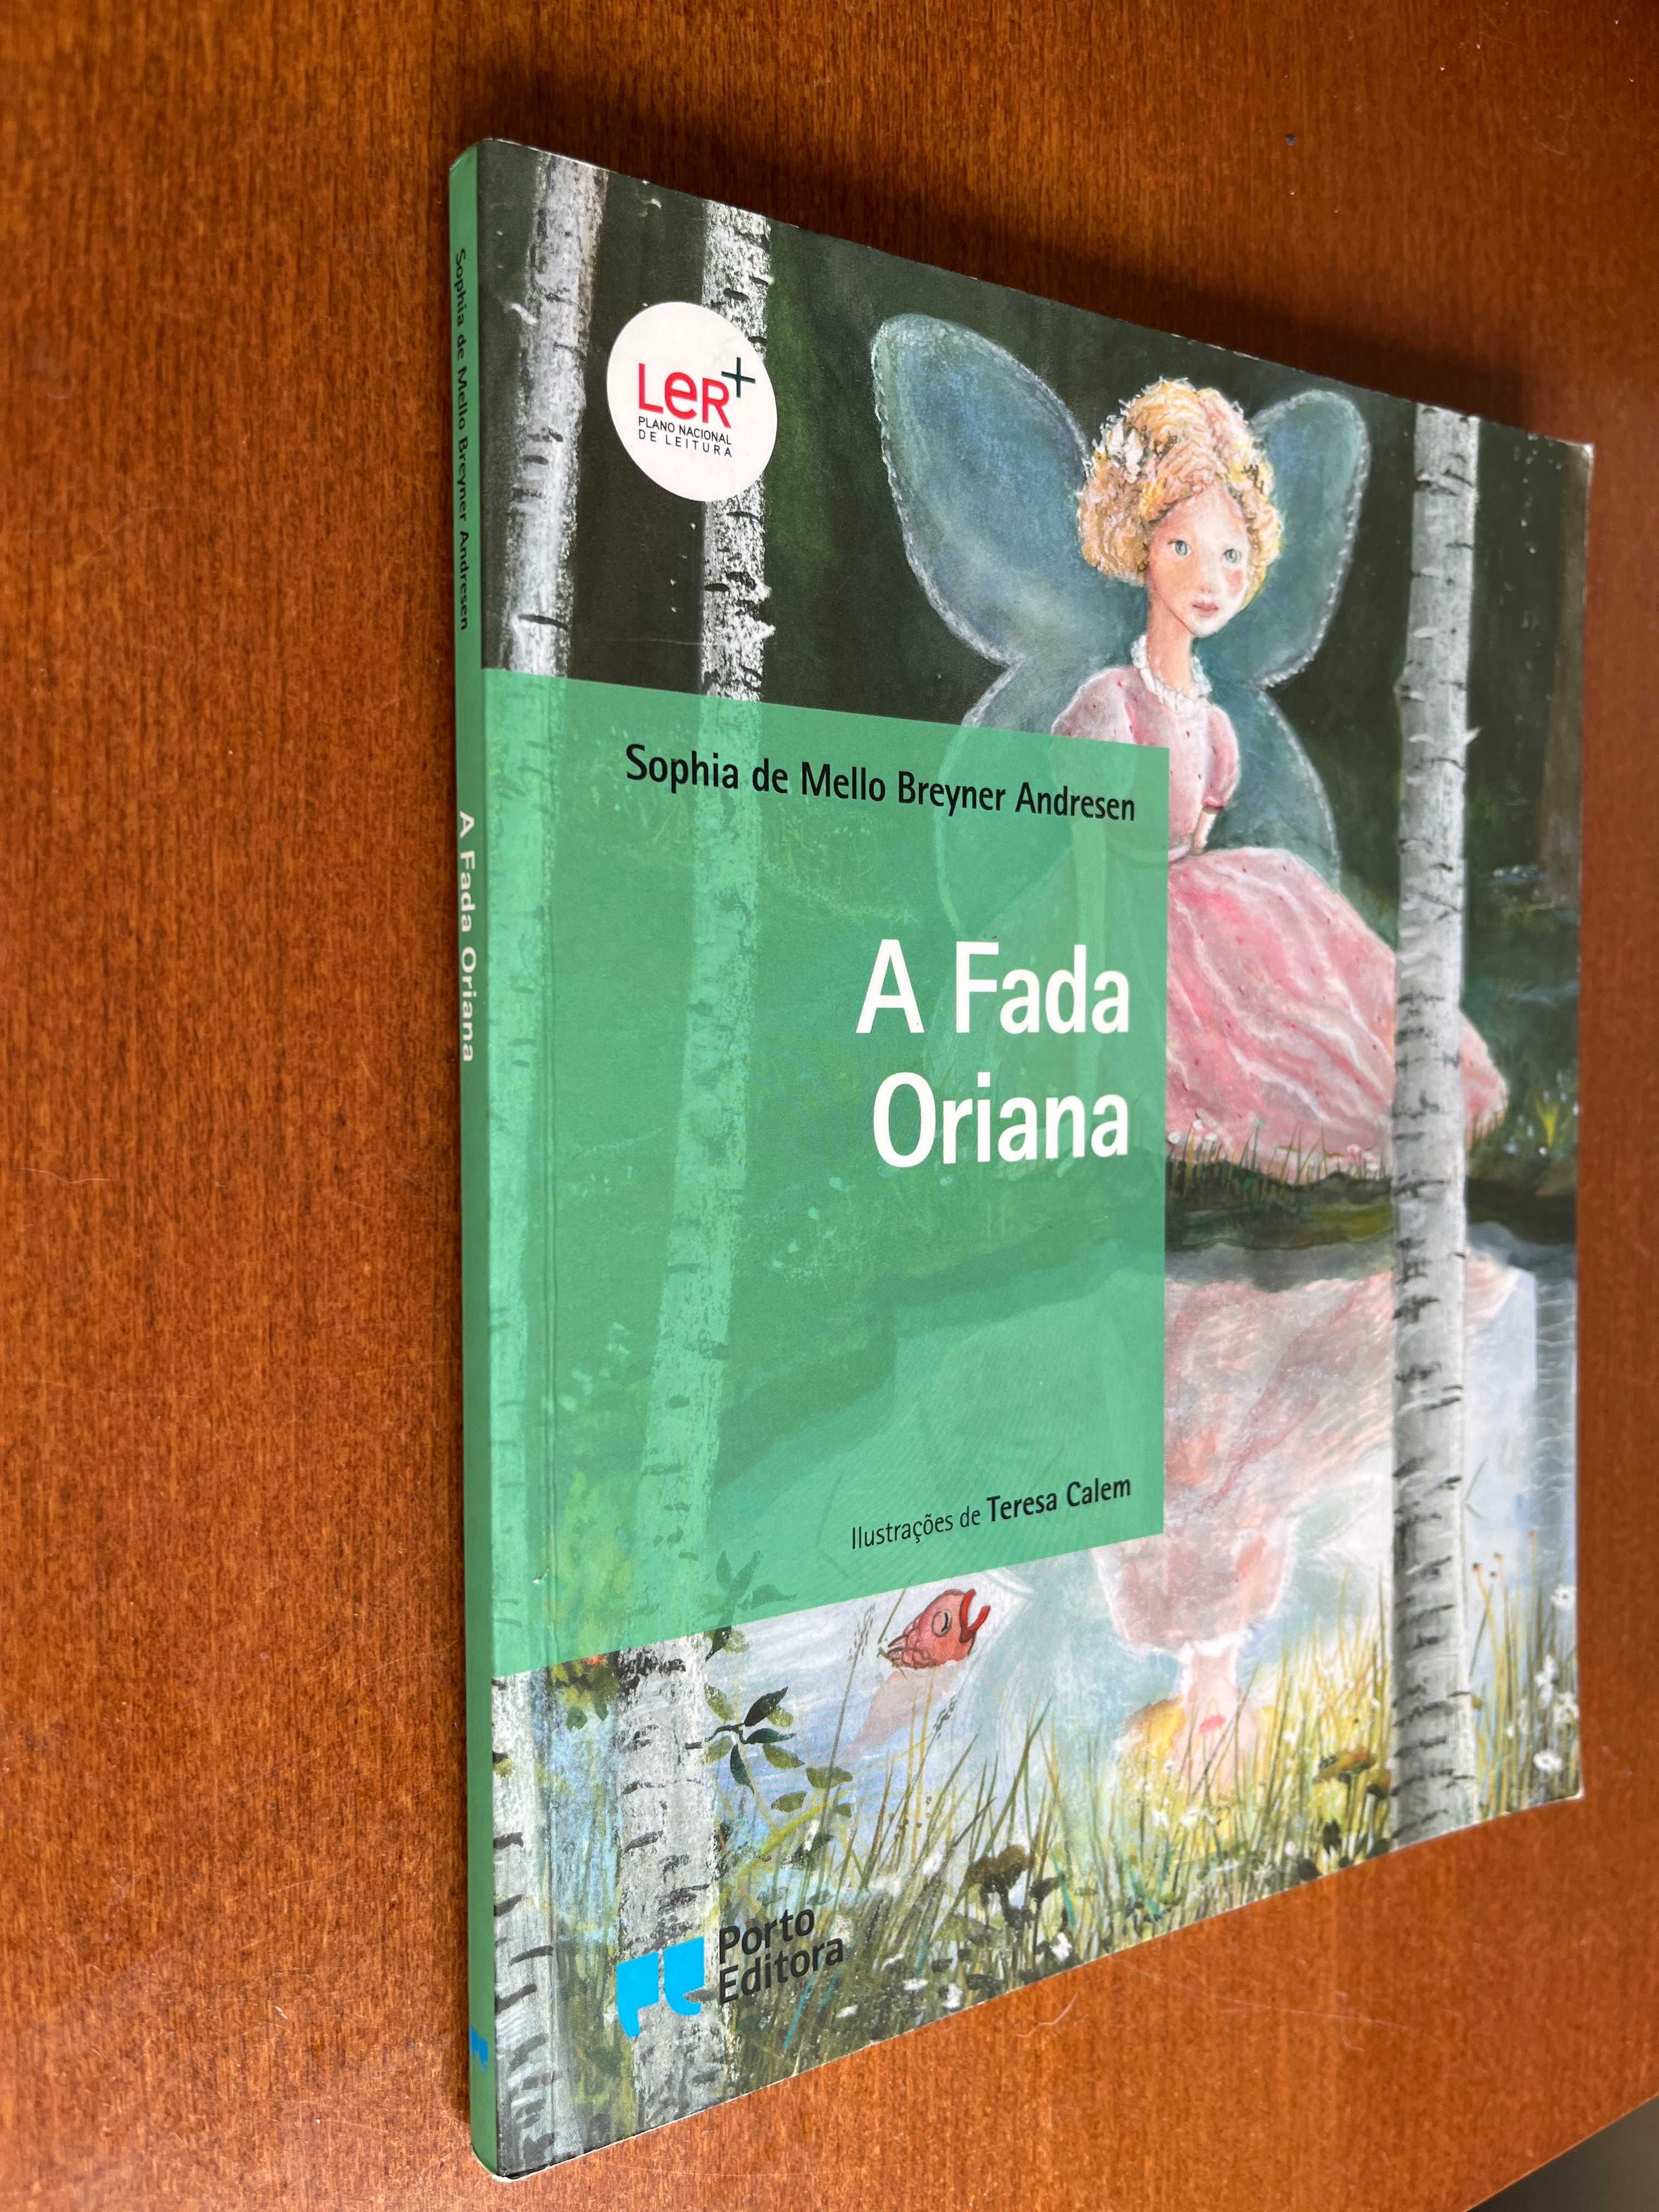 Fada Oriana - Sophia de Mello Breyner Andersen - LER+